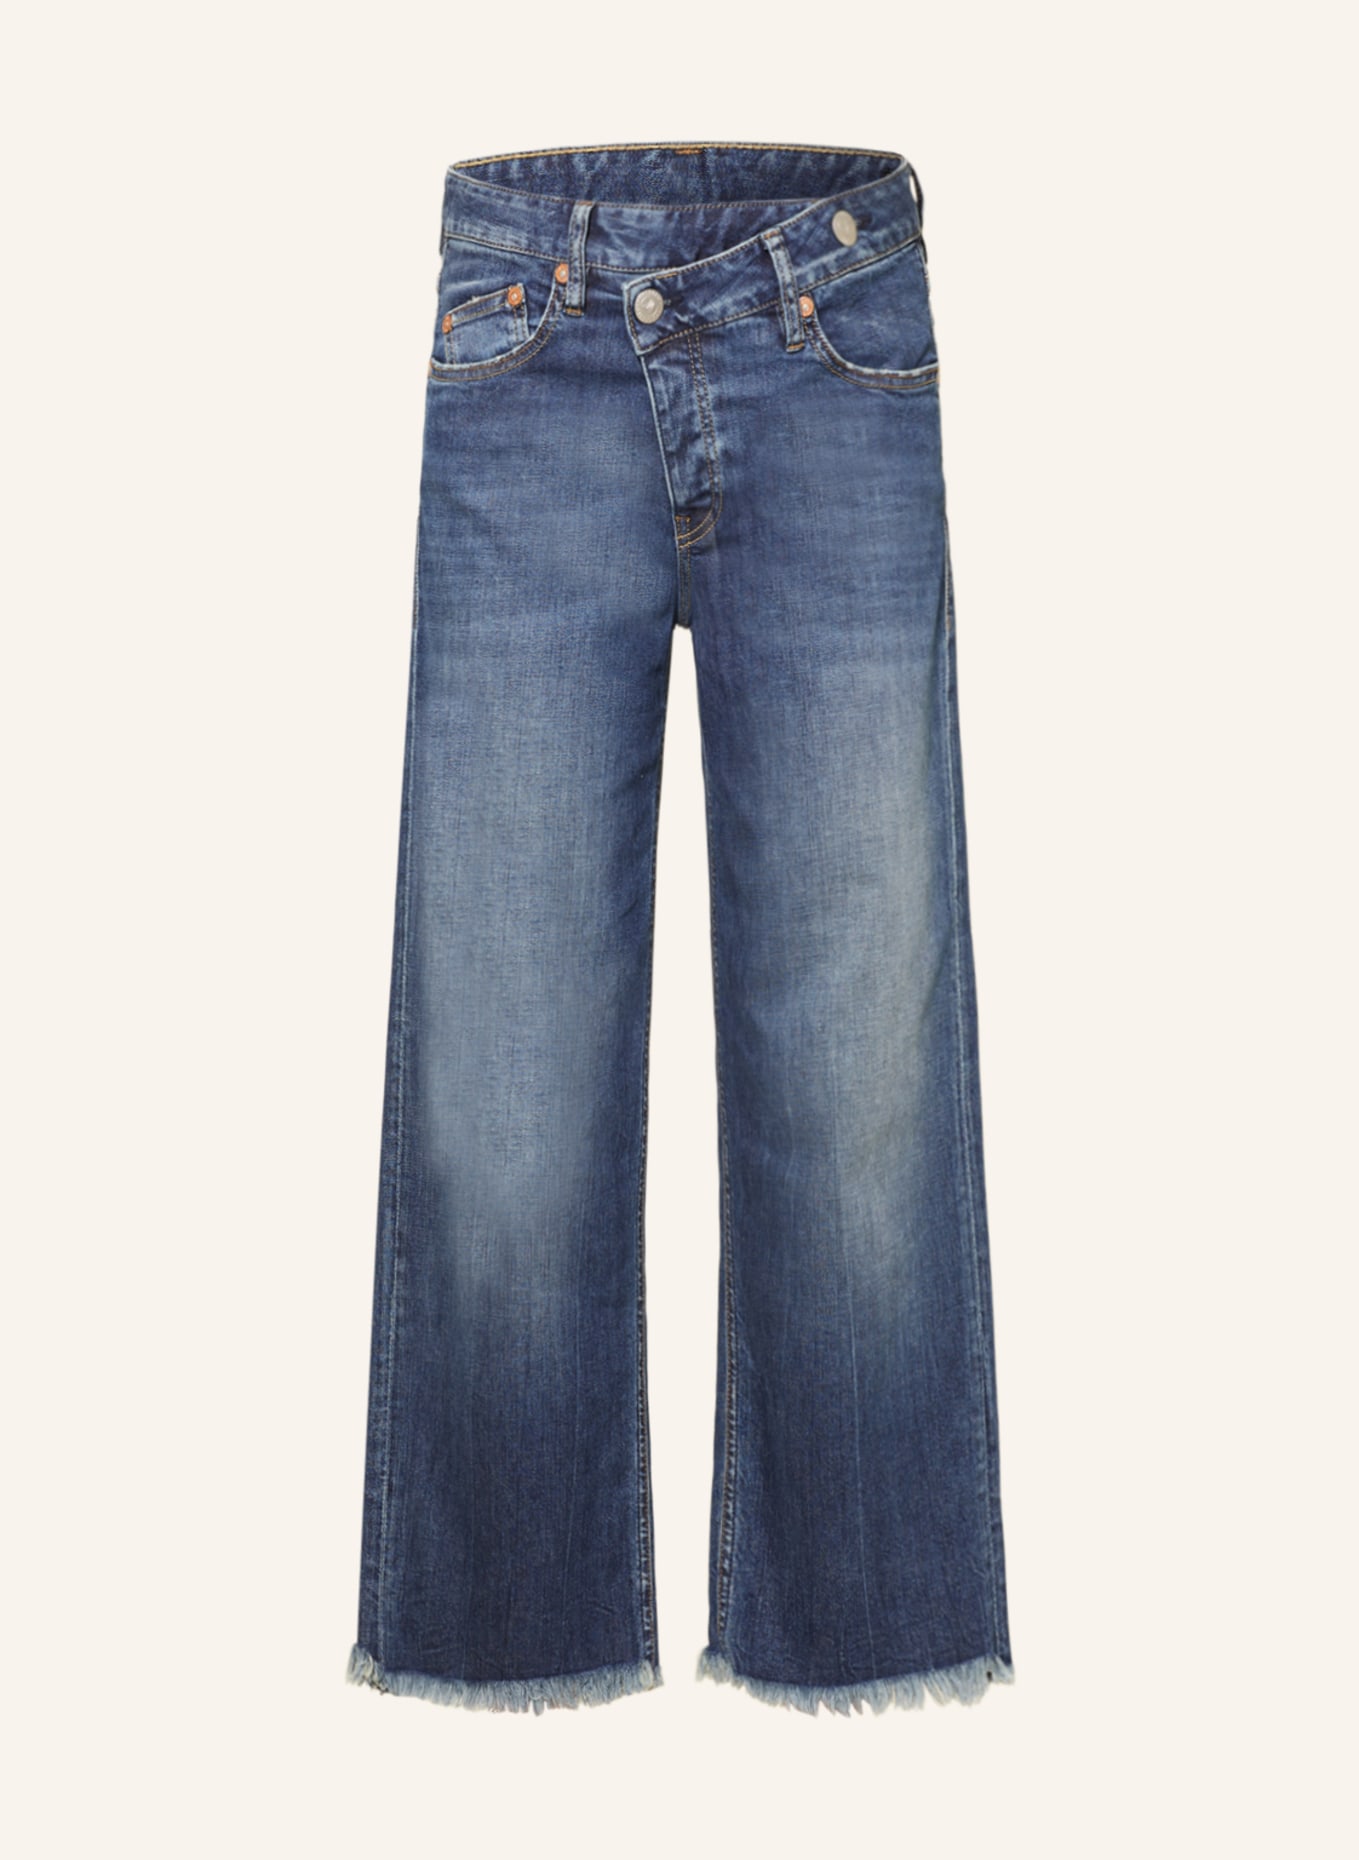 Herrlicher Jeans-Culotte MÄZE SAILOR, Farbe: 958 marlin blue (Bild 1)